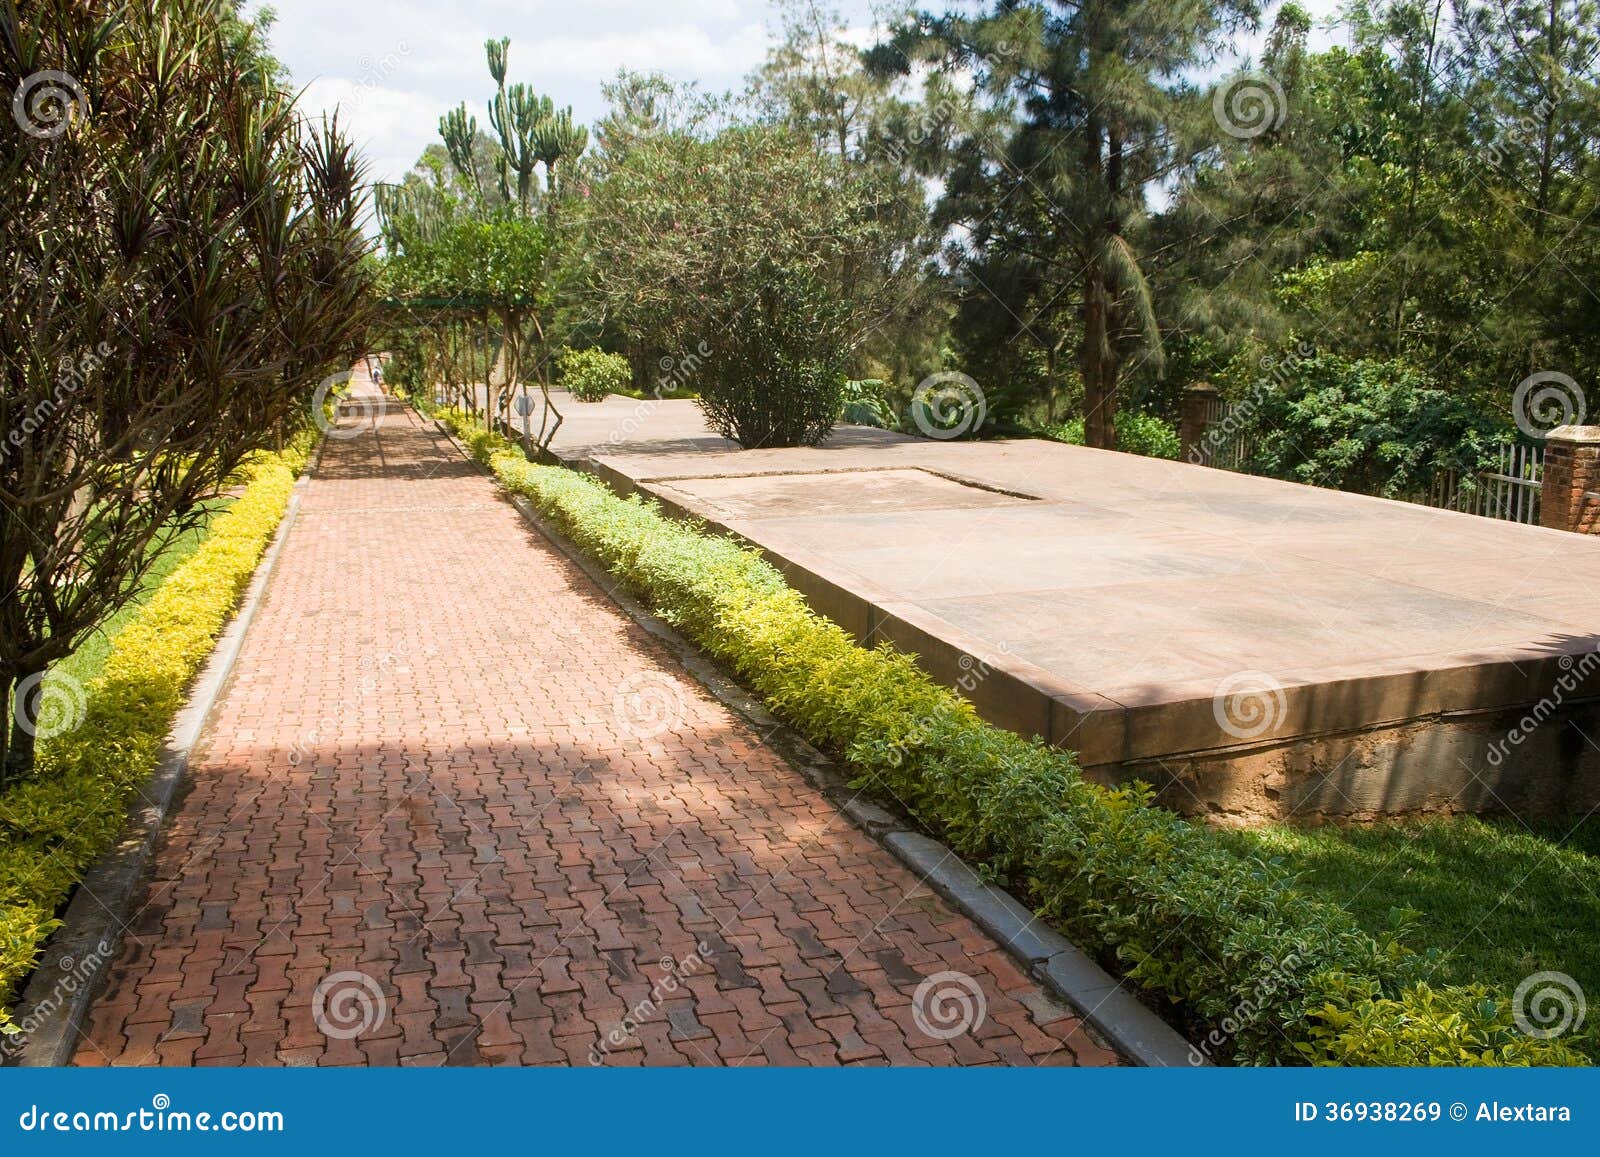 graves of kigali genocide memorial centre